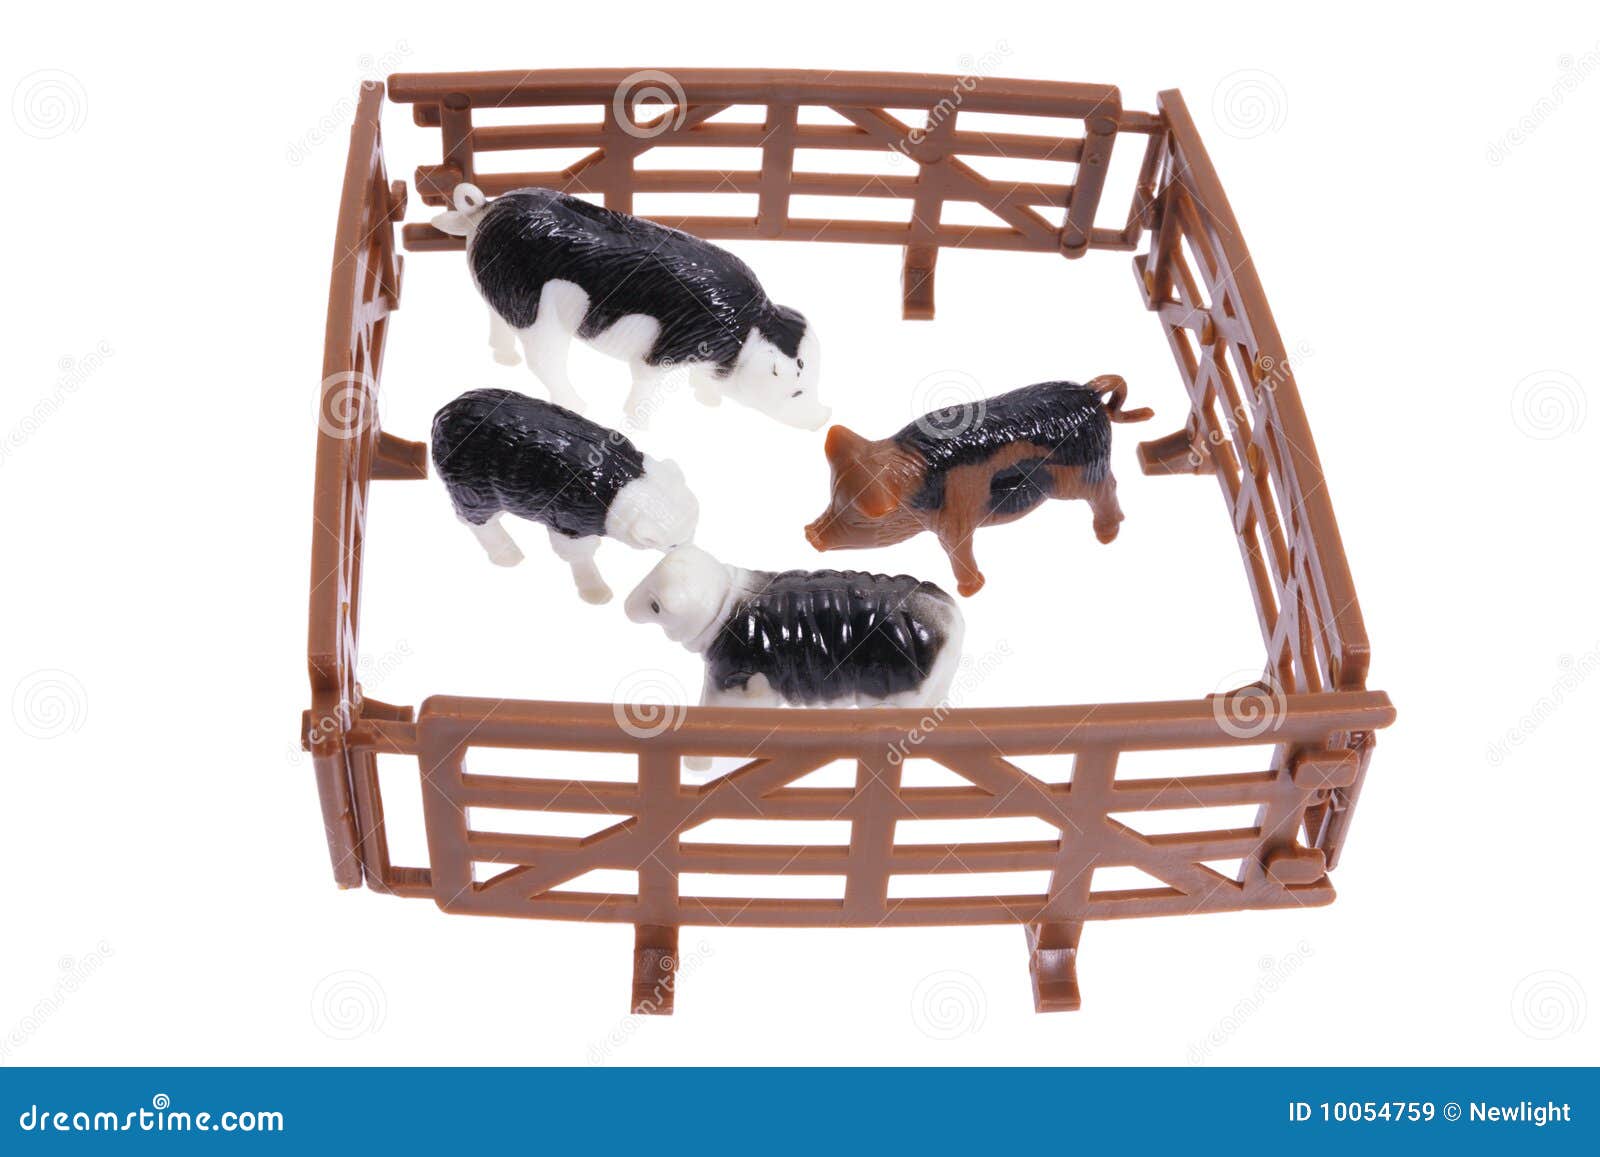 Miniature Farm Animals stock image. Image of breeding - 10054759